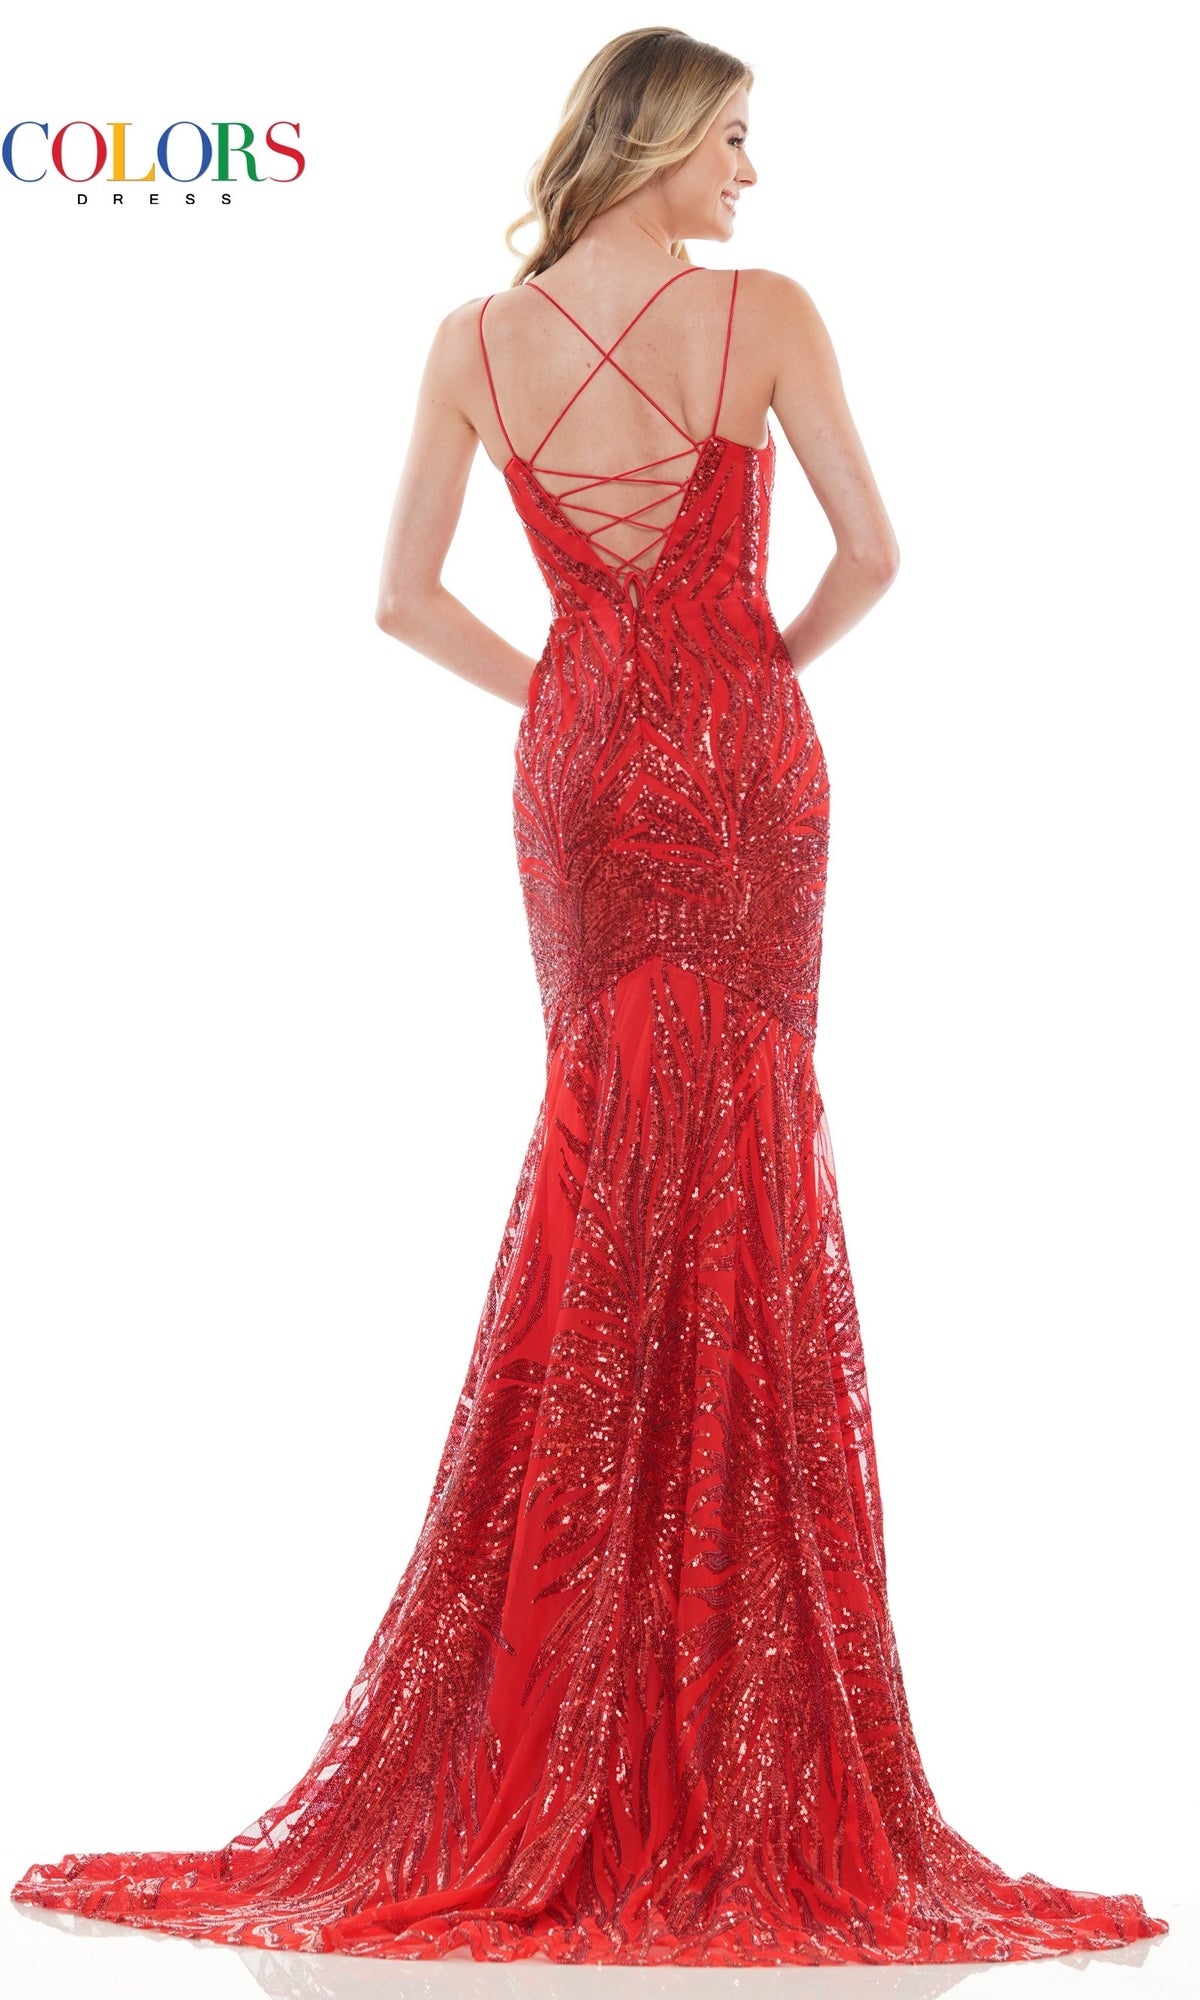 Sleek Sequin-Print Long Lace-Up Prom Dress 2743